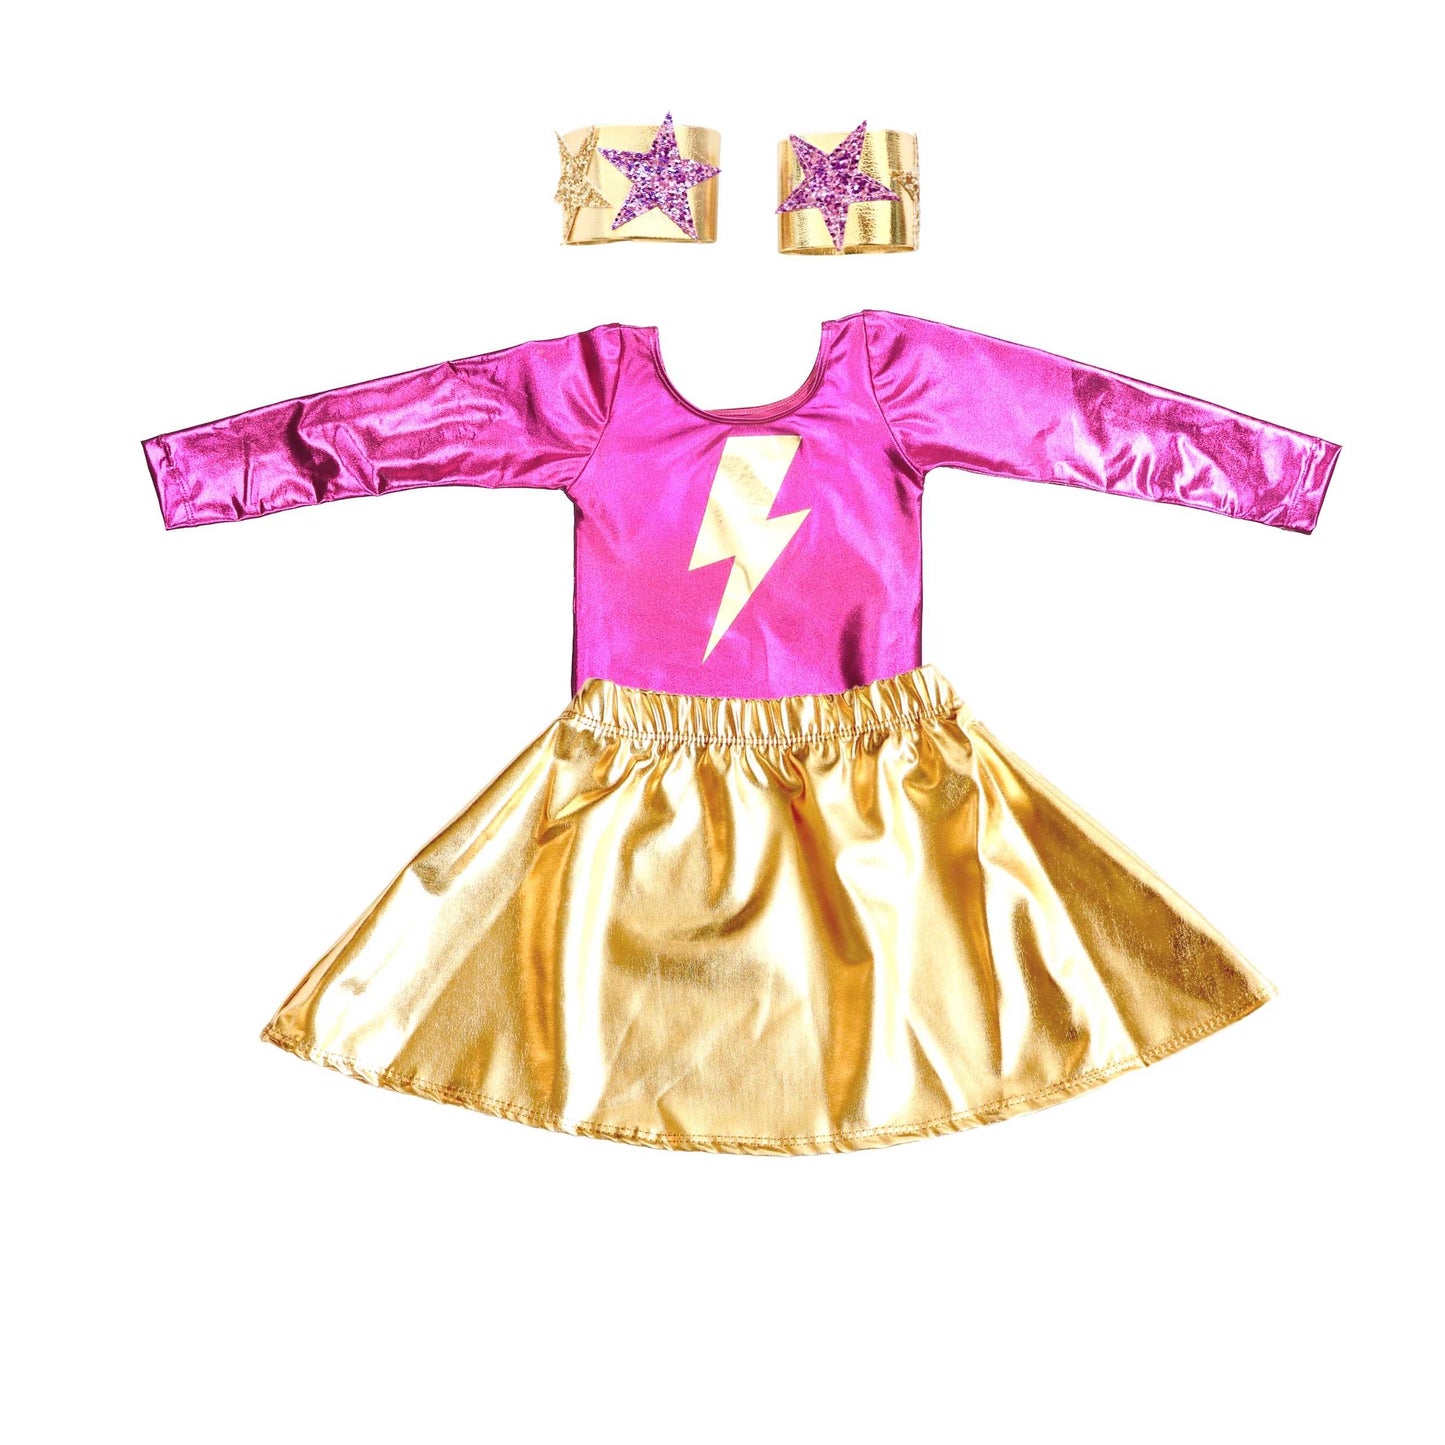 Super Hero Lightning Bolt Costume Set - Pink & Gold Long Sleeve (M Listing)